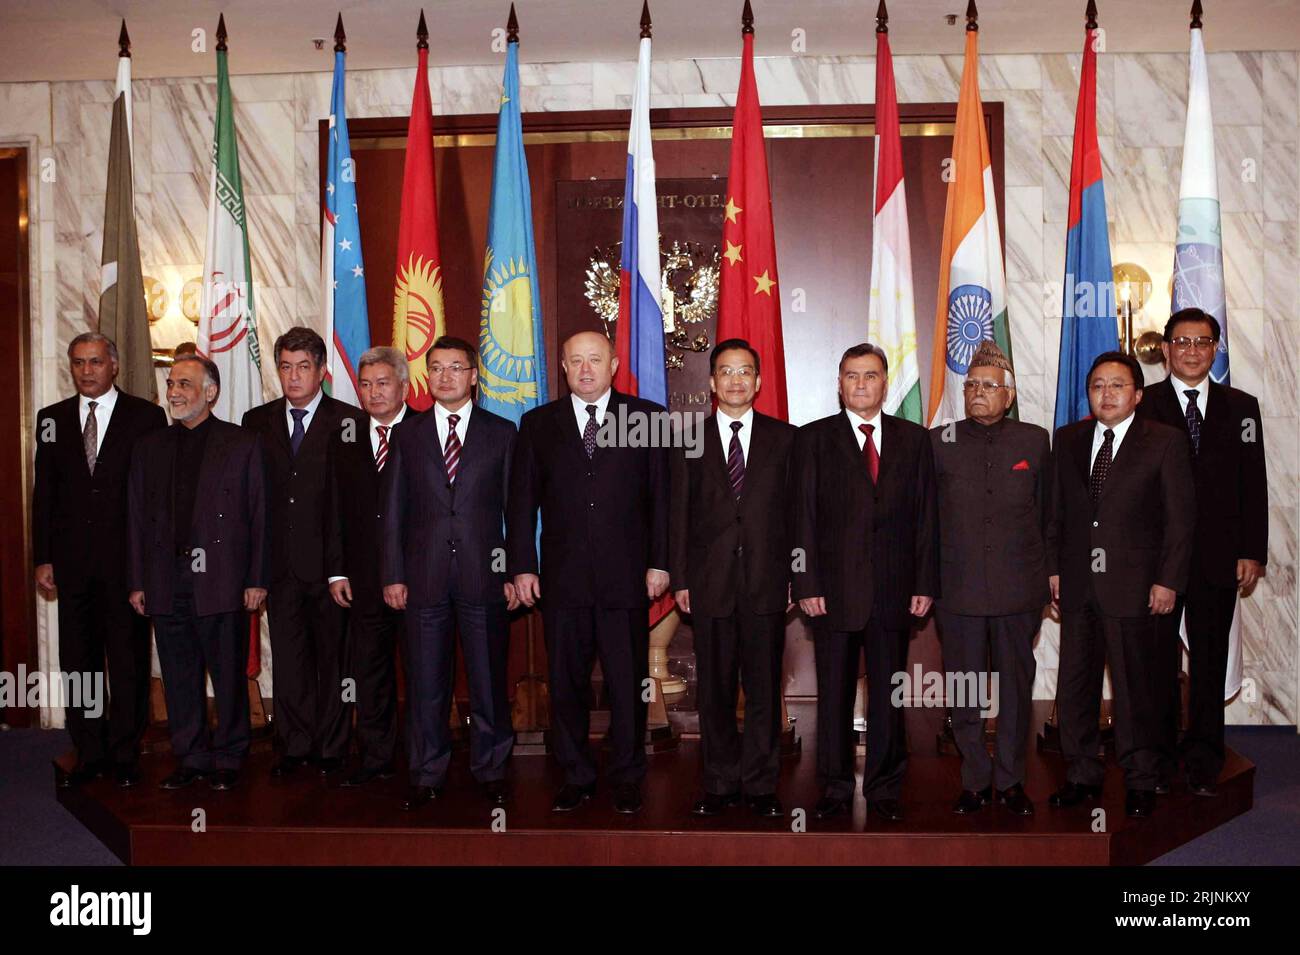 Bildnummer: 50964700  Datum: 26.10.2005  Copyright: imago/Xinhua V.l.n.r.: Shaukat Aziz (PAK/Premierminister Pakistan), Parviz Dawoodi (IRI/Vizepräsident Iran), Uktur Tukhtamuradovich Sultanov (UZB/Stellvertretender Premierminister Usbekistan), Feliks Kulov (KGZ/Premierminister Kirgistan), Daniyal Akhmetov (KAZ/Premierminister Kasachstan), Mikhail Fradkov (RUS/Premierminister Russland), Wen Jiabao (CHN/Premierminister China), Kil Akilov (TJK/Premierminister Tadschikistan), Natwar Singh (IND/Außenminister Indien), Tsakhia Elbegdorj (MGL/Premierminister Mongolei) und Generalsekretär der SCO Zhan Stock Photo